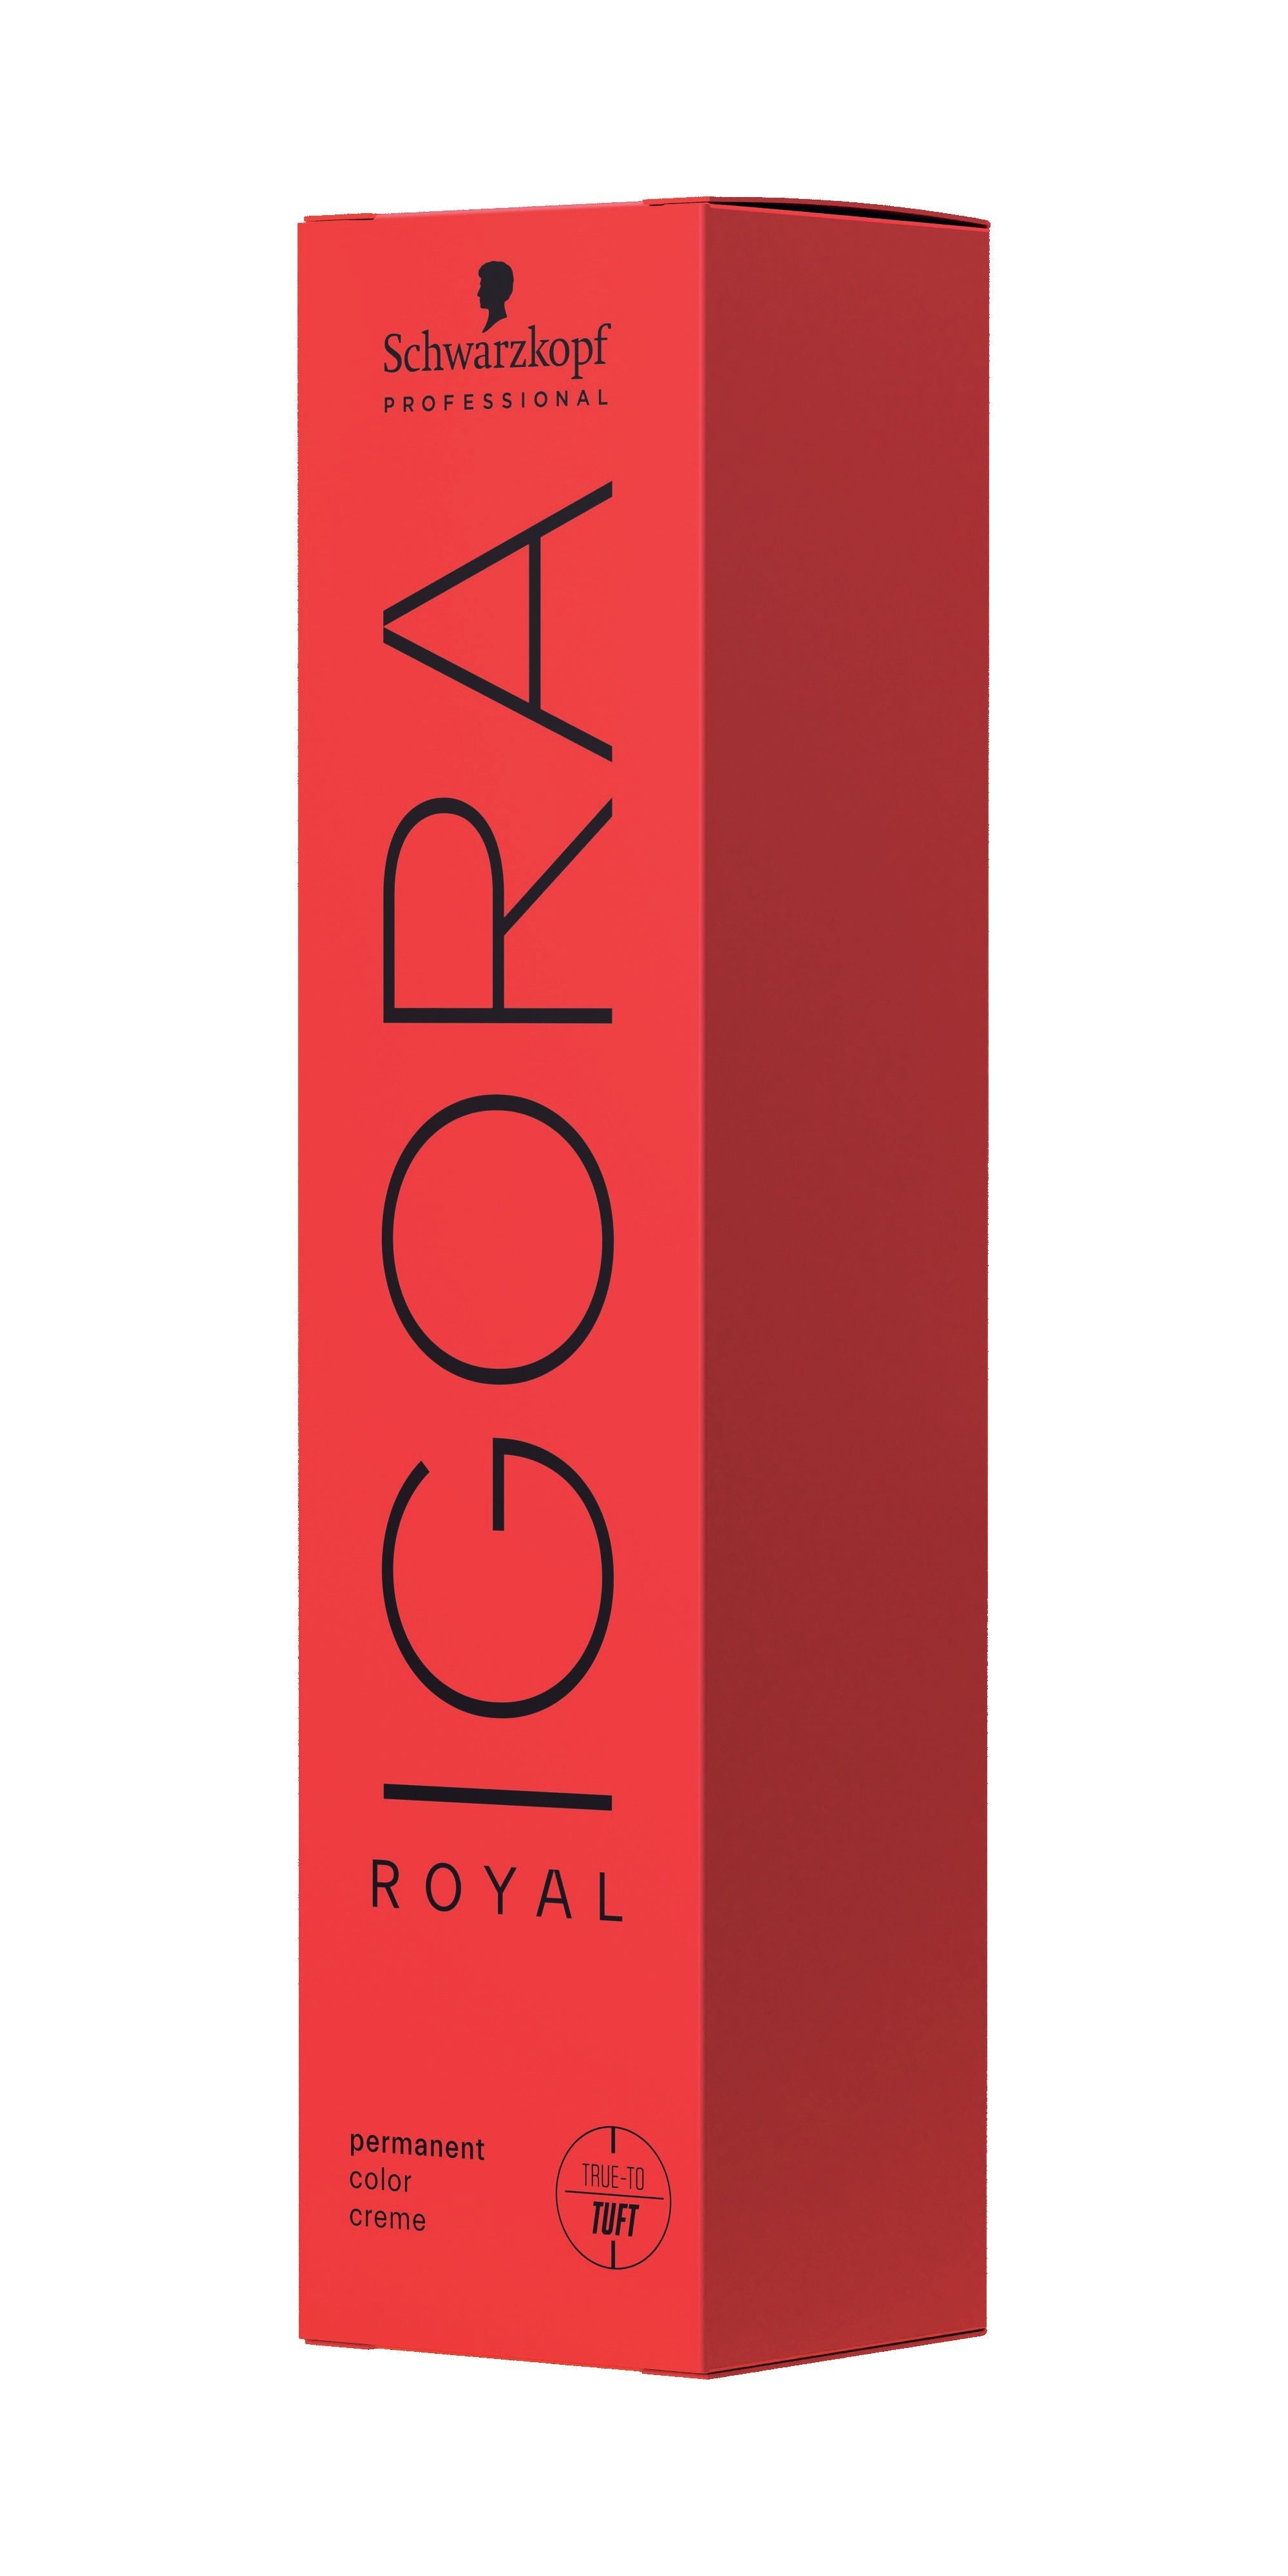 Schwarzkopf Igora Royal 5-6 LIGHT BROWN CHOCOLATE, 60g – Radiant